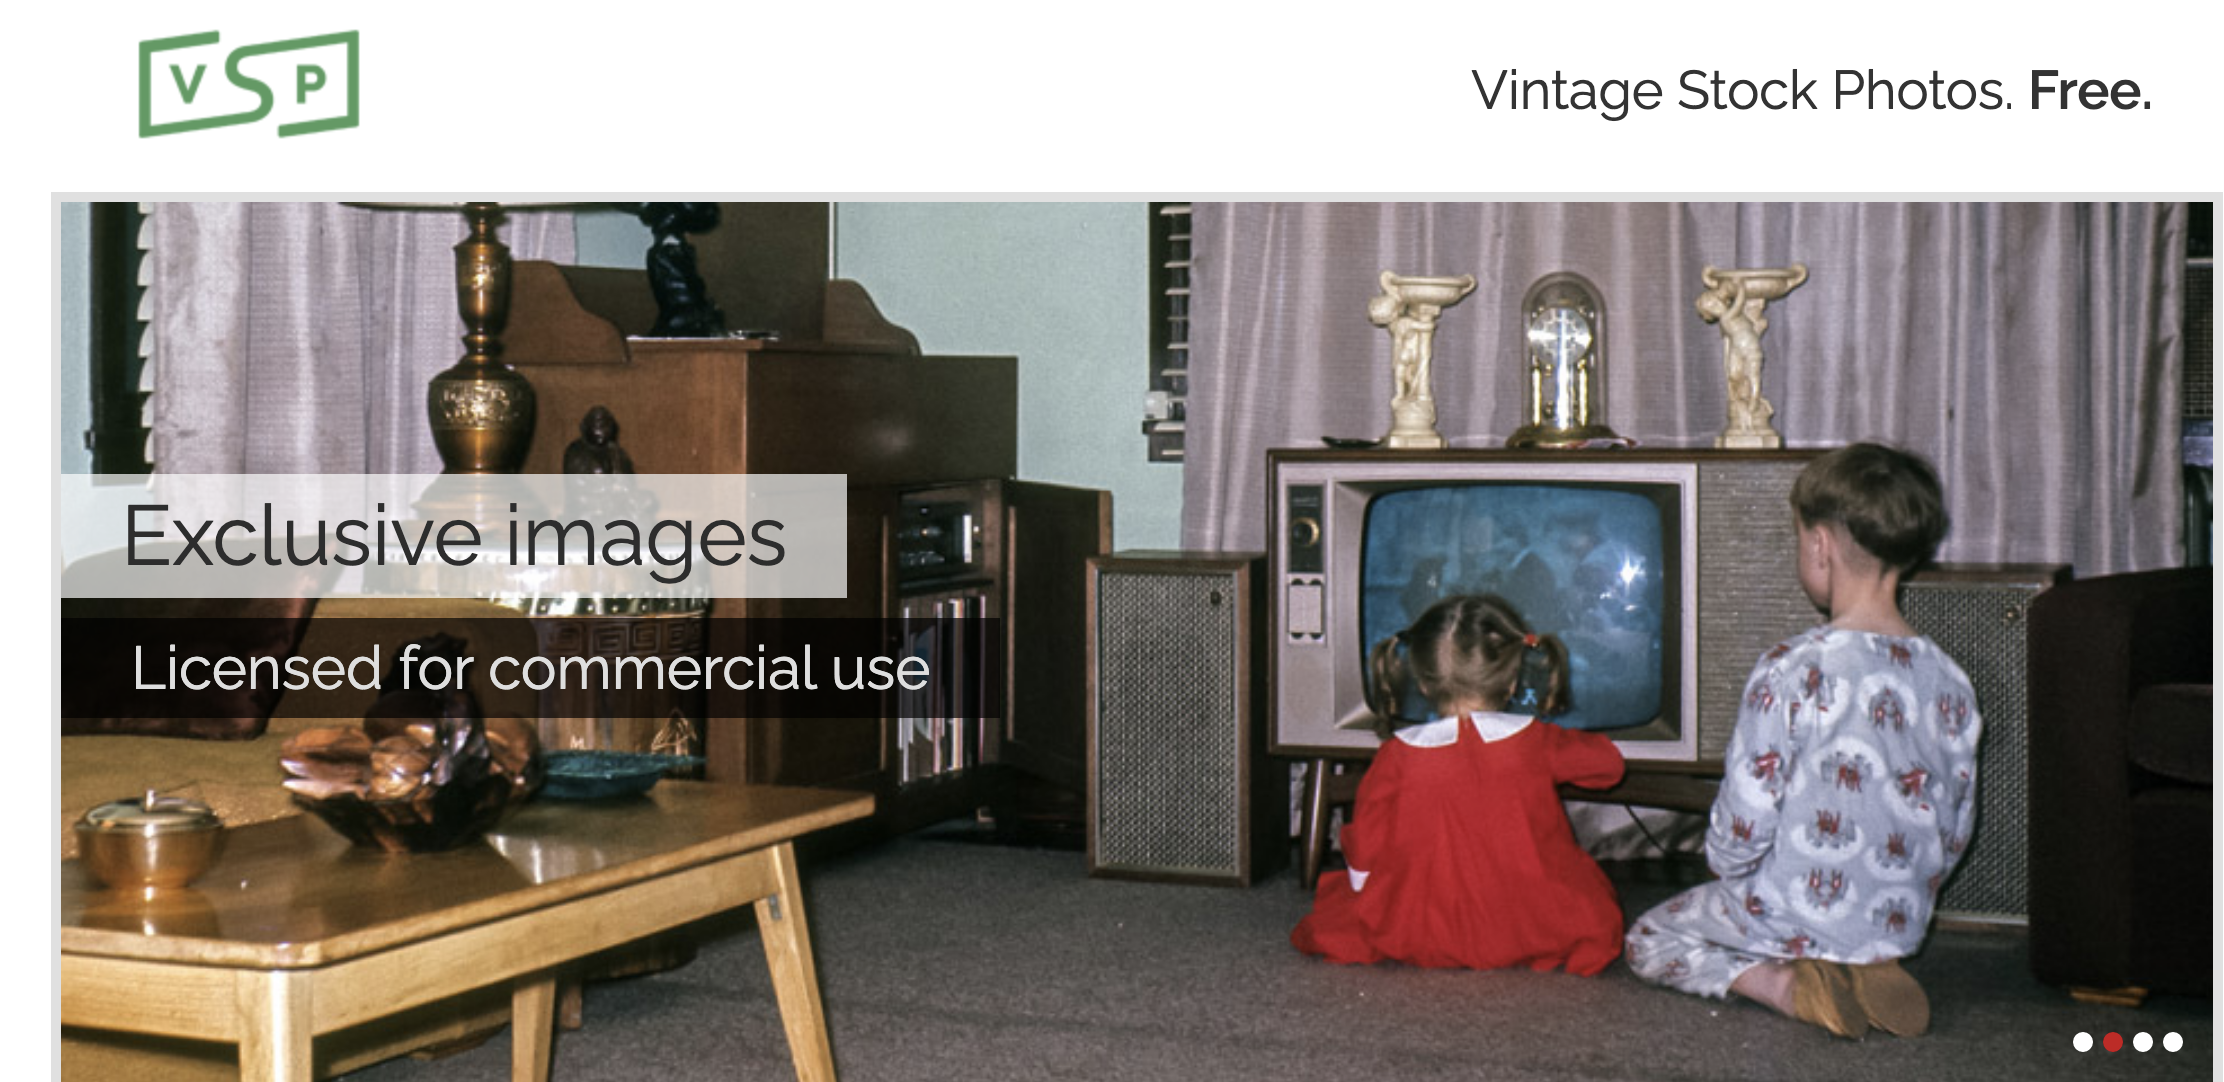 Vintage Stock Photos提供大量复古风格的免费图库